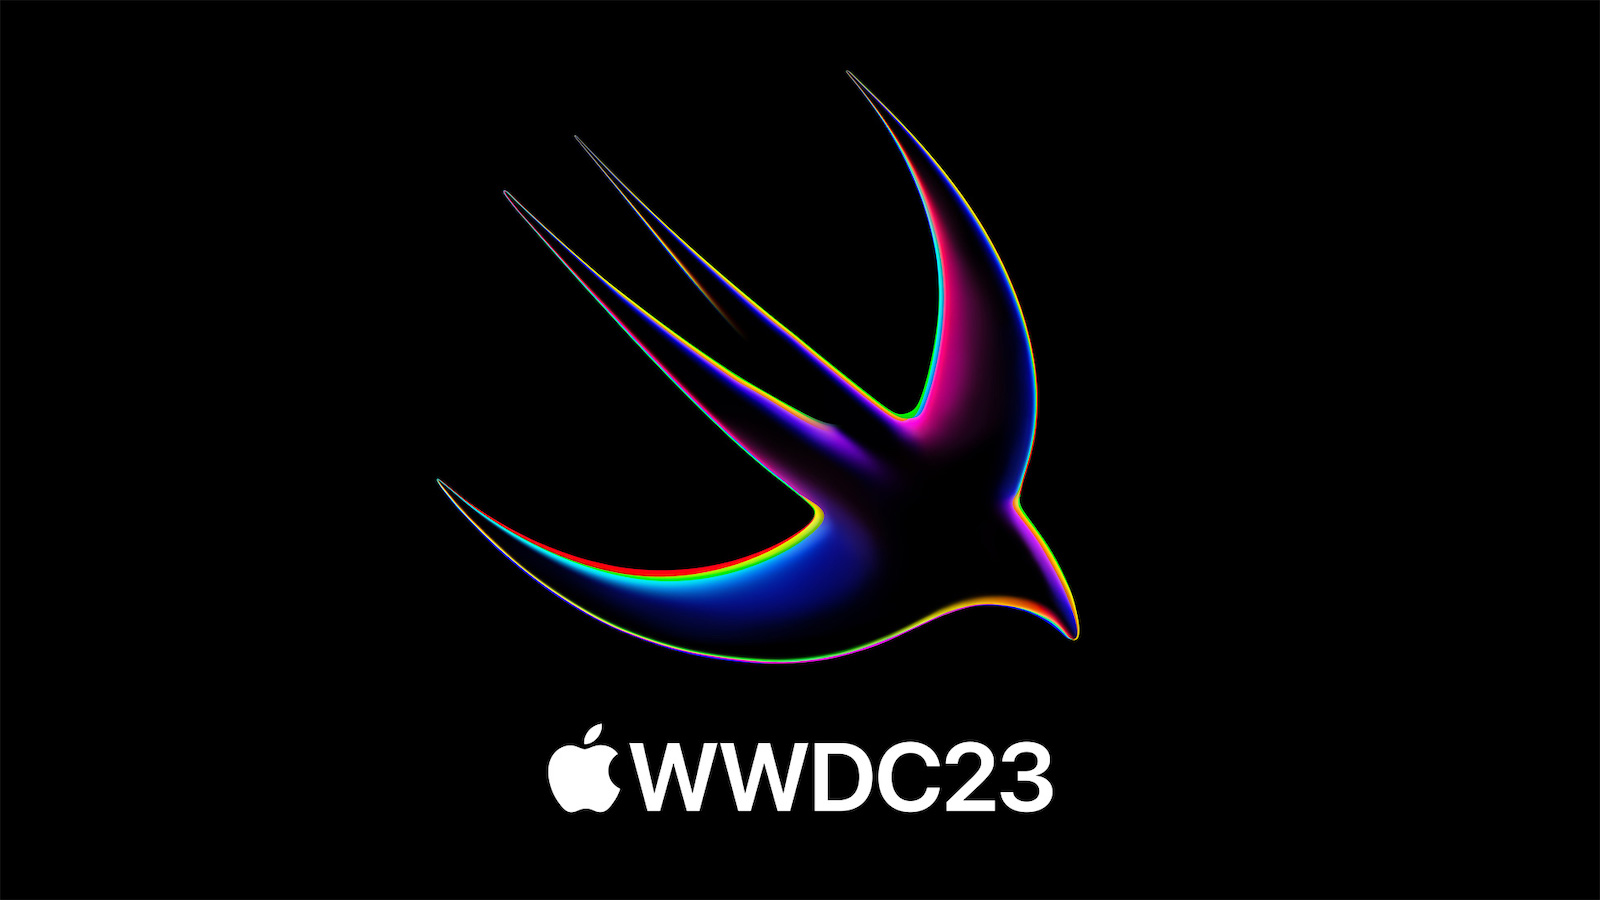 Apple WWDC23 event announcement hero